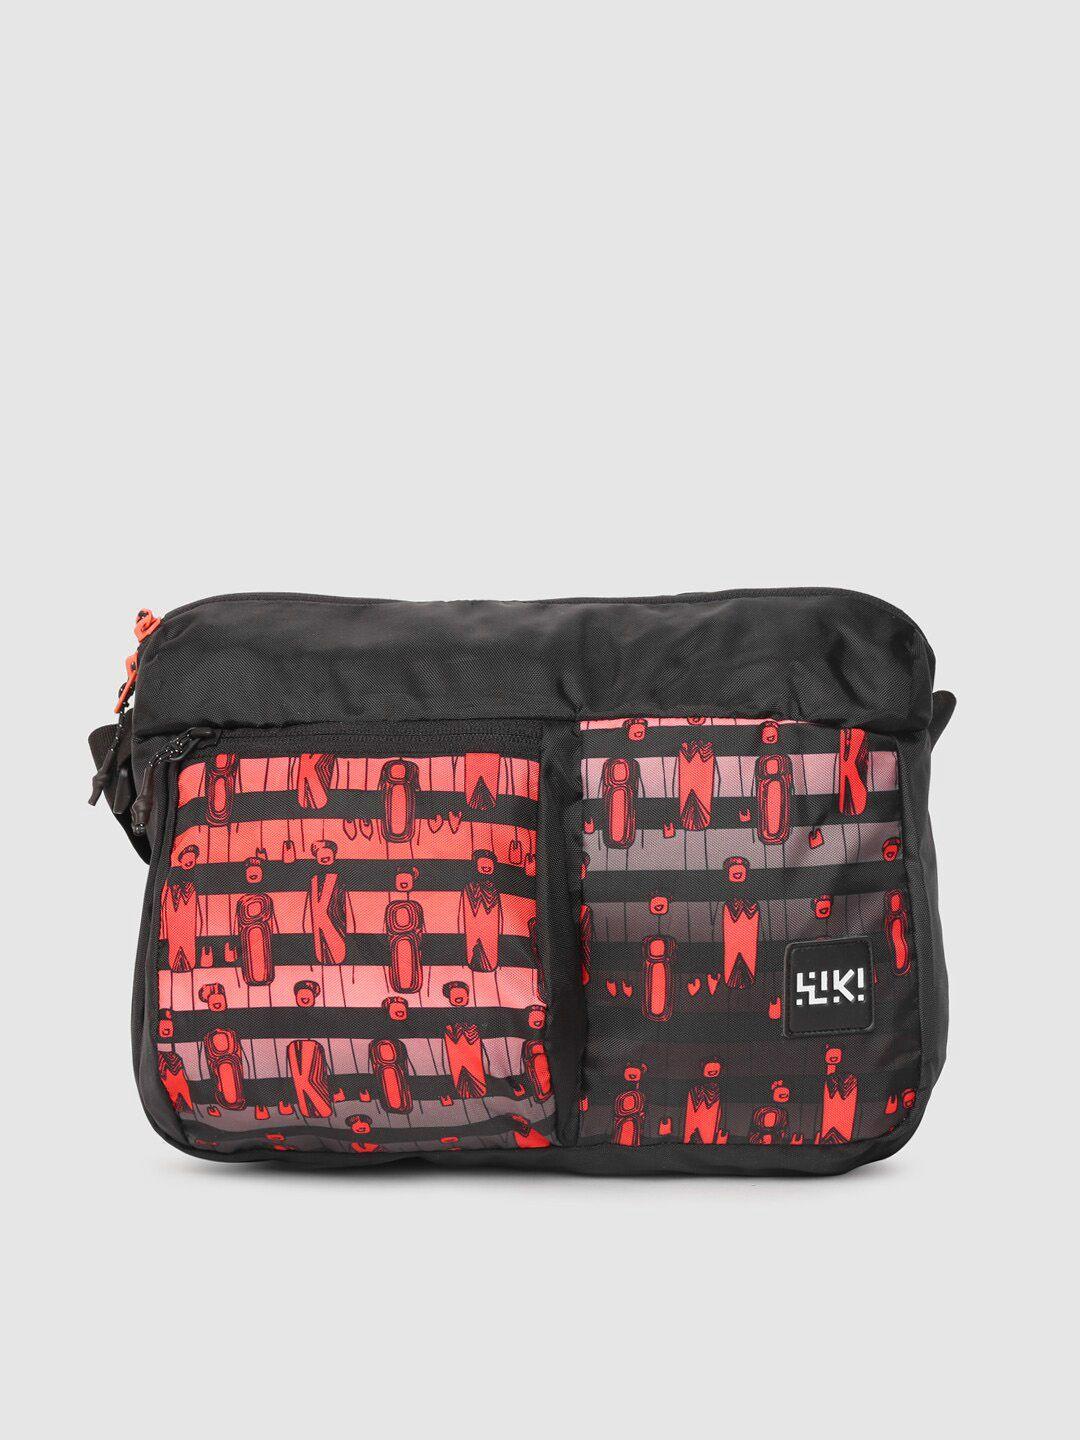 wildcraft unisex black & red printed wiki fling-it messenger bag